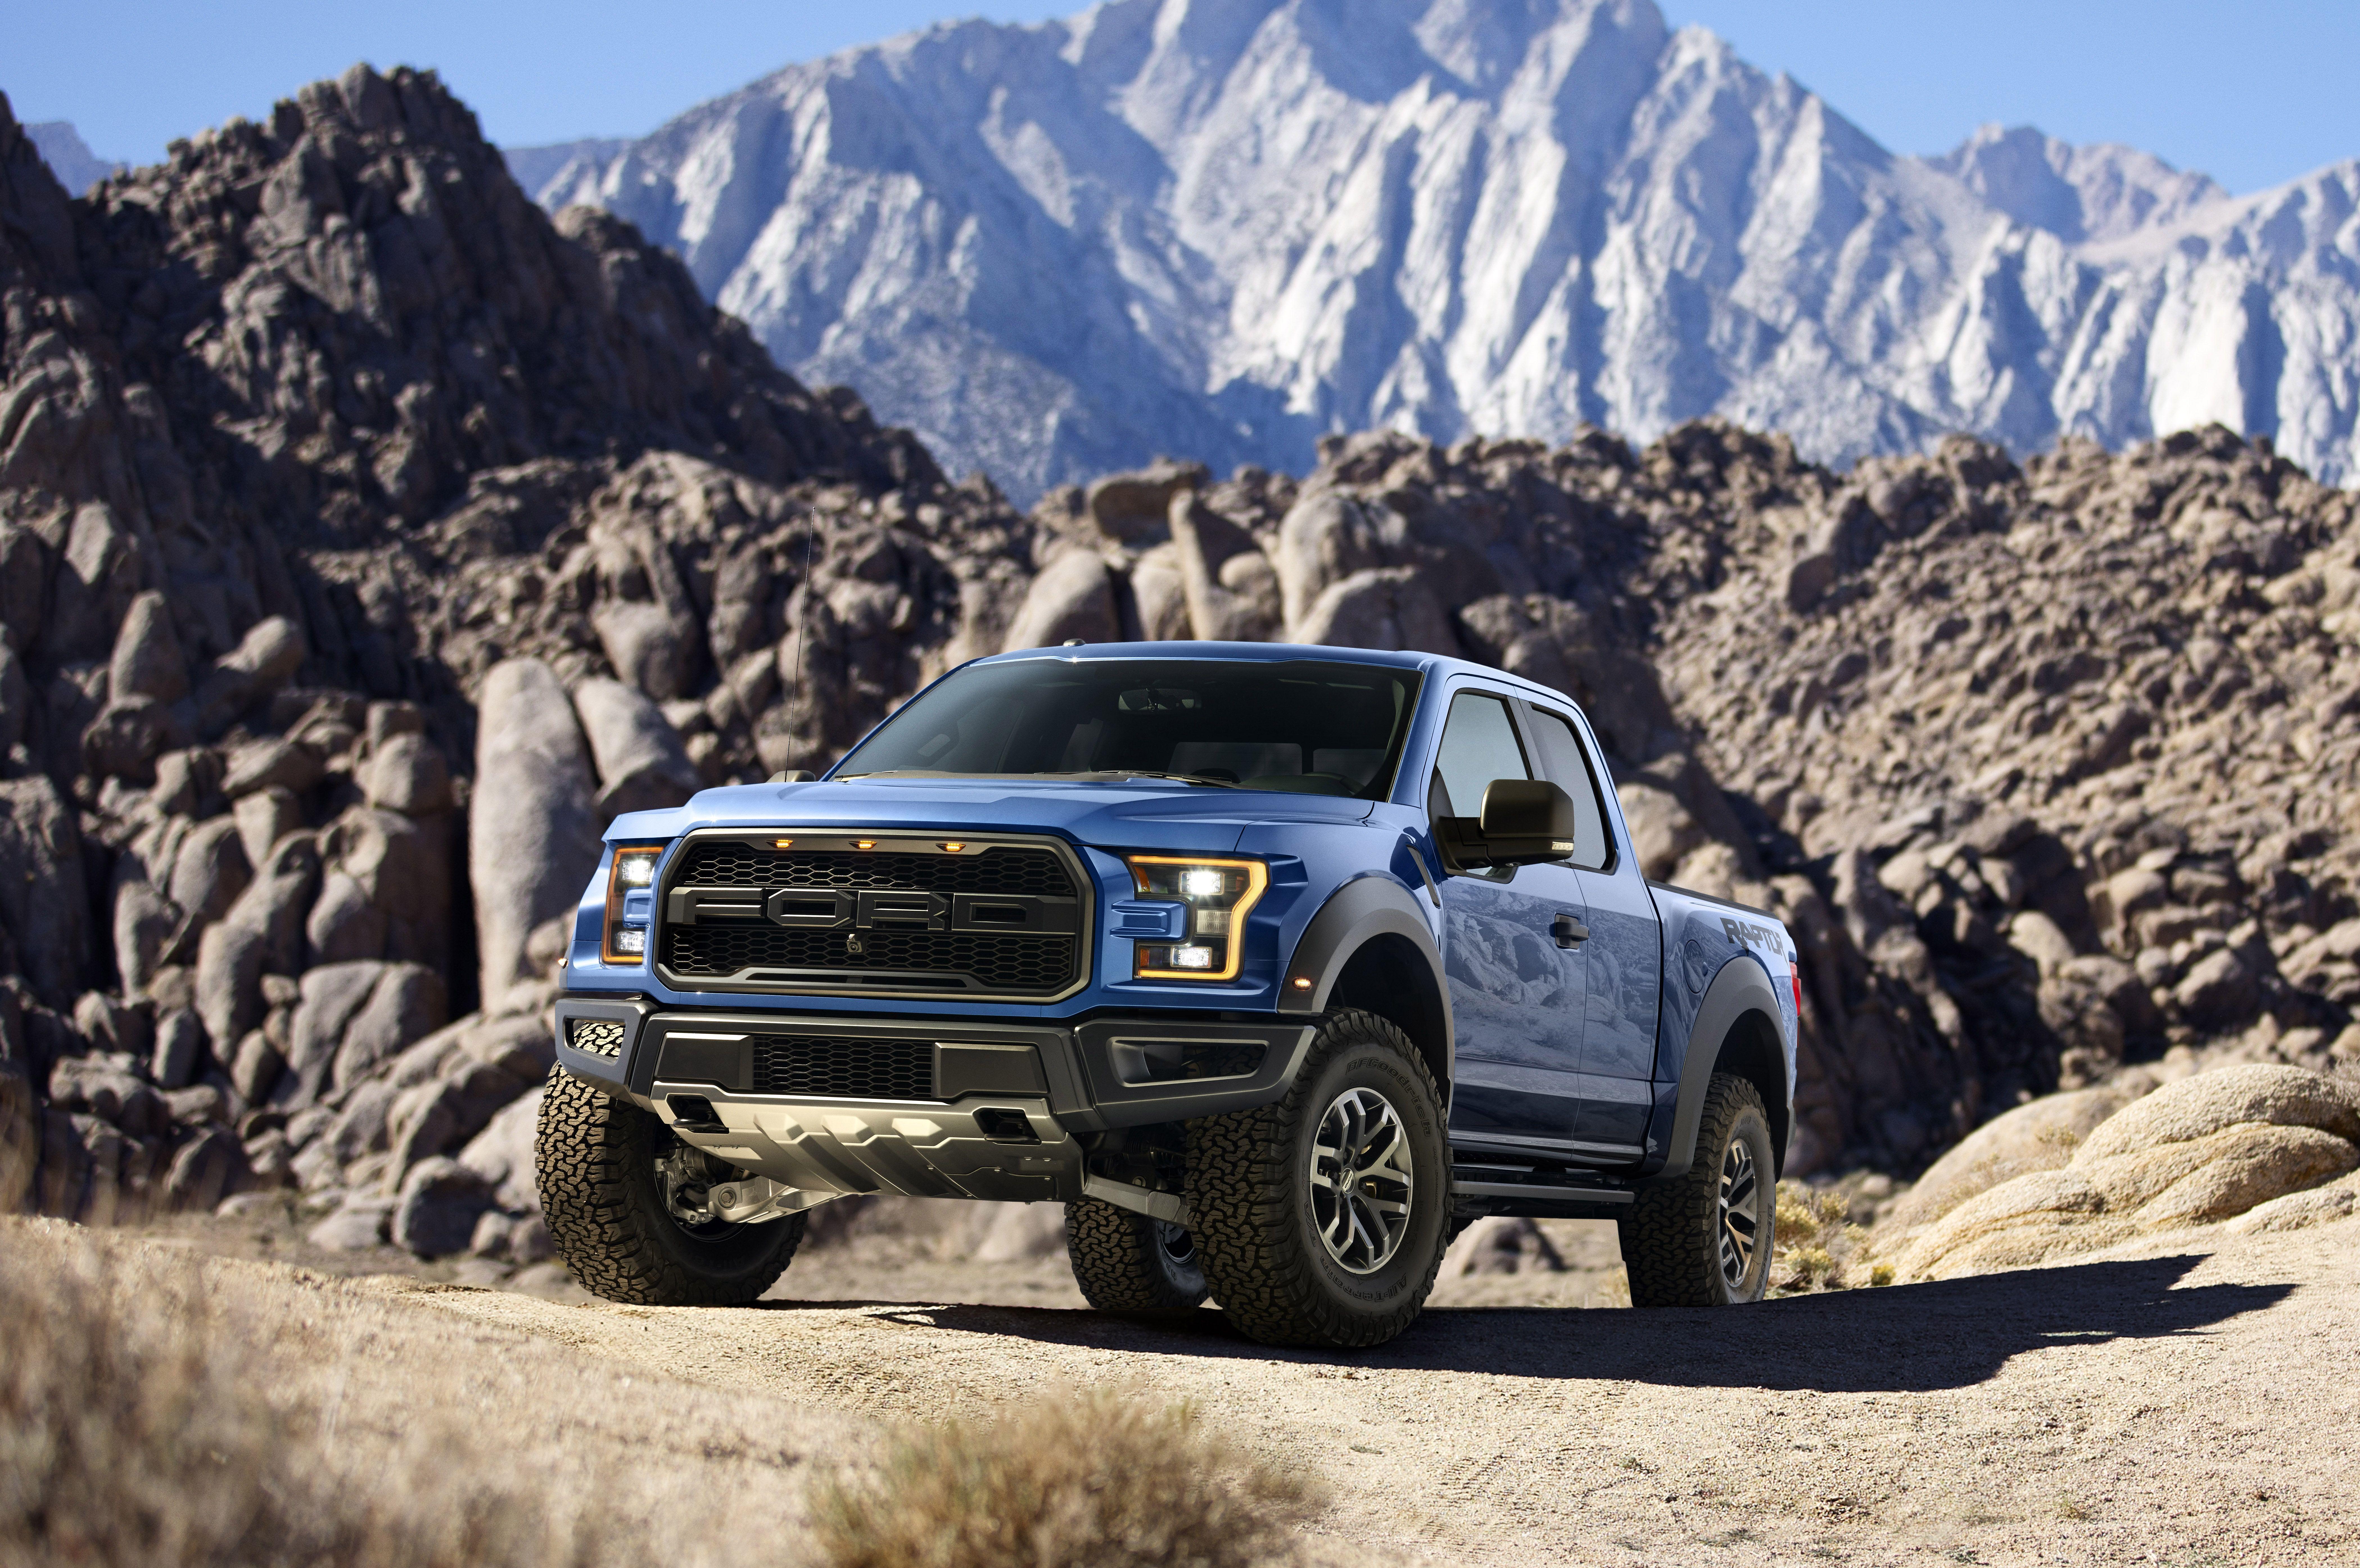 Ford reinvents tougher, smarter Raptor for 2016. Medium Duty Work